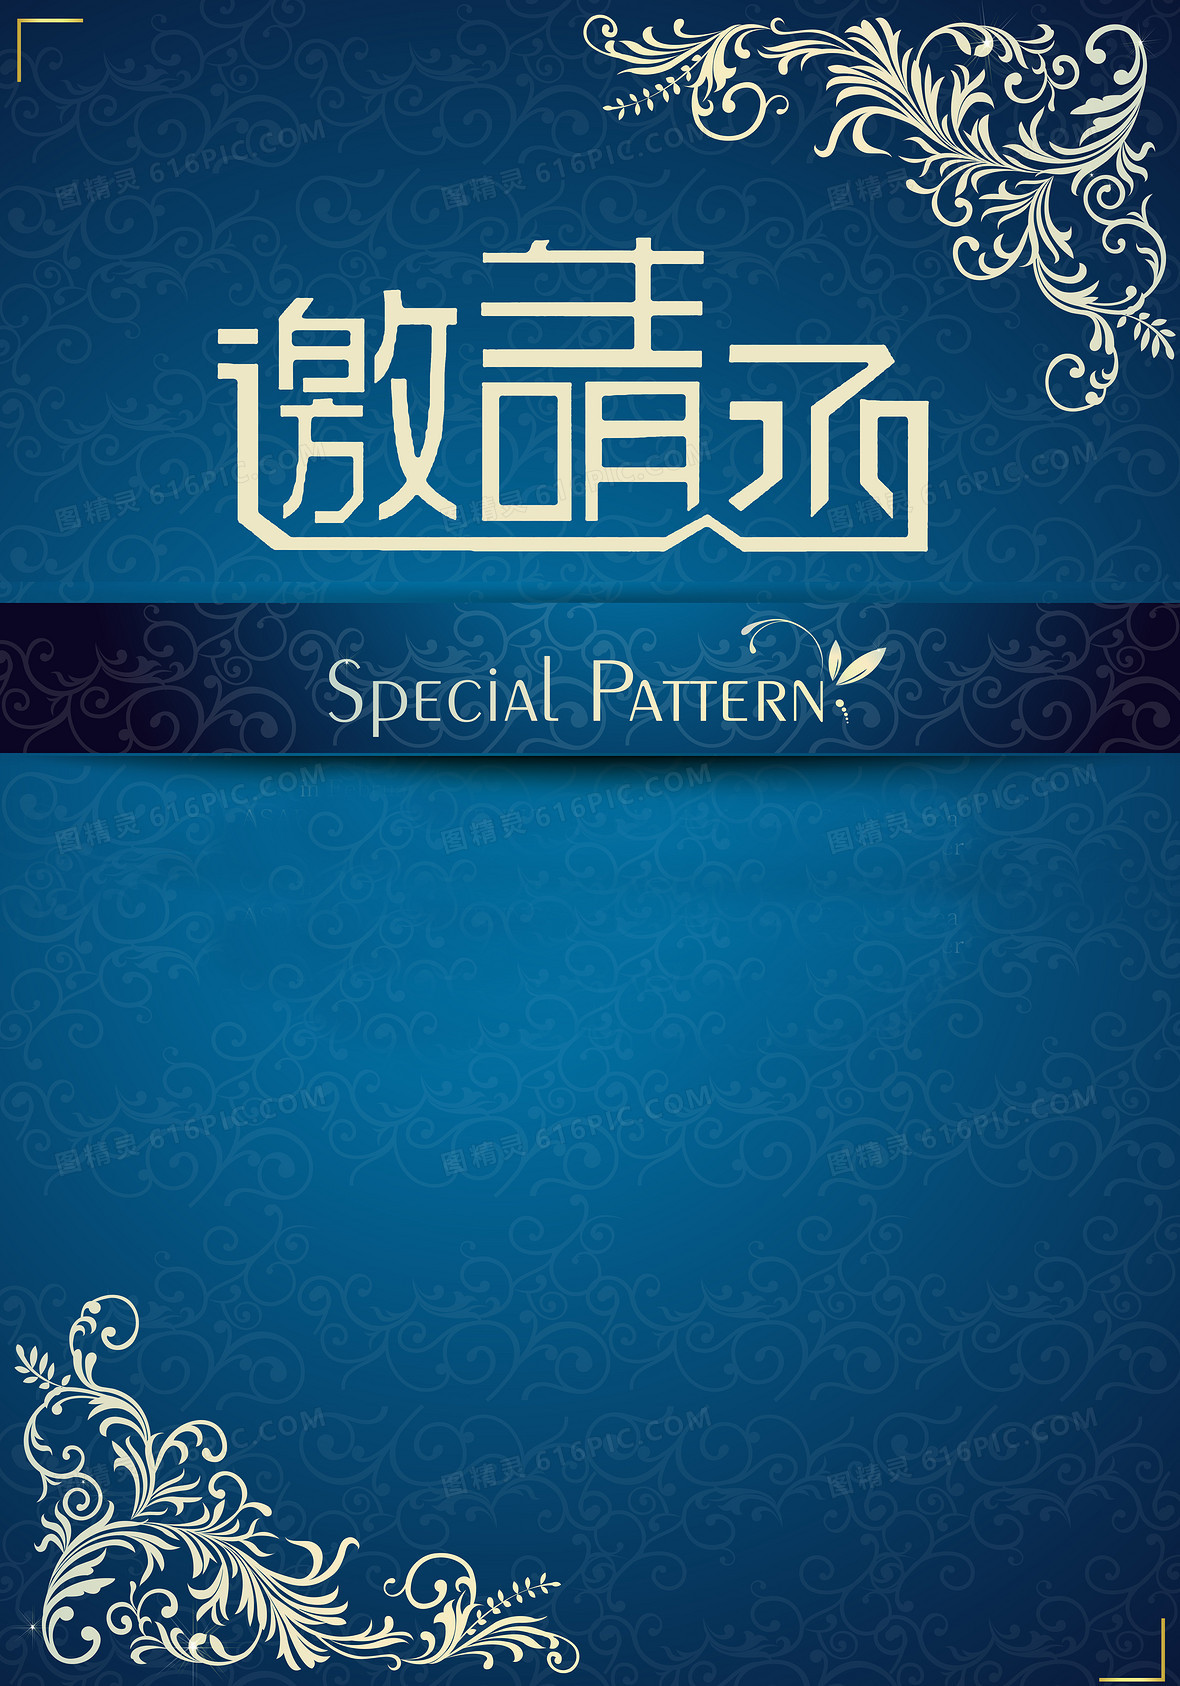 5070 × 3213jpgai中国风蓝色水墨商务邀请函模板psd分层图片素材1920